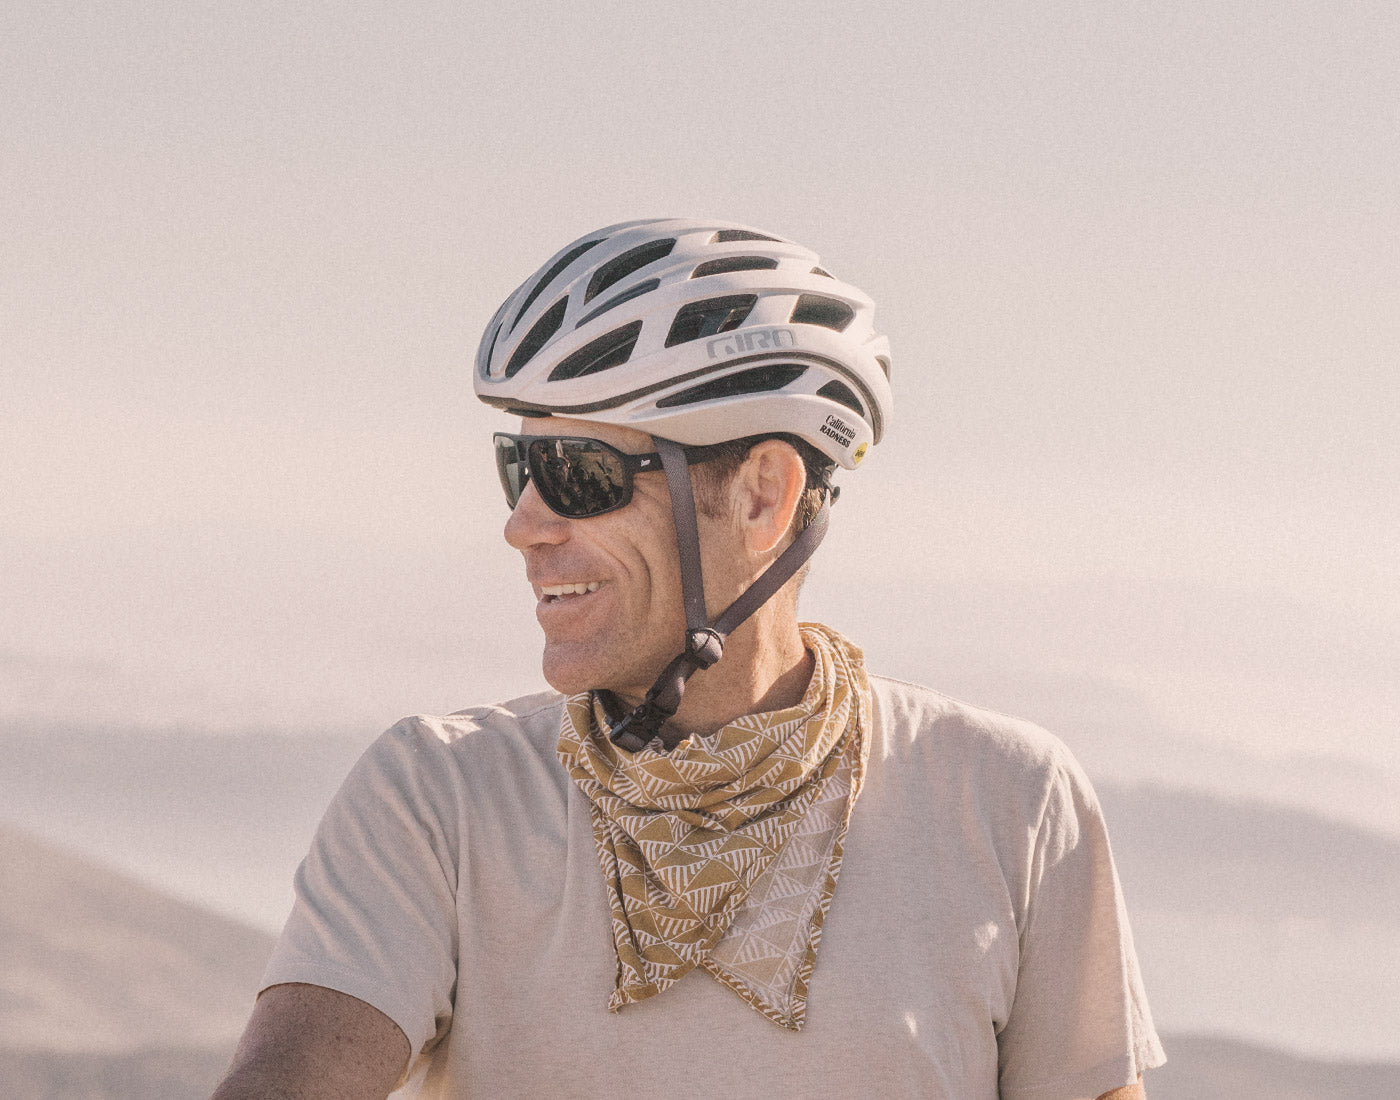 profile of guy in a bike helmet wearing sunski velo sunglasses